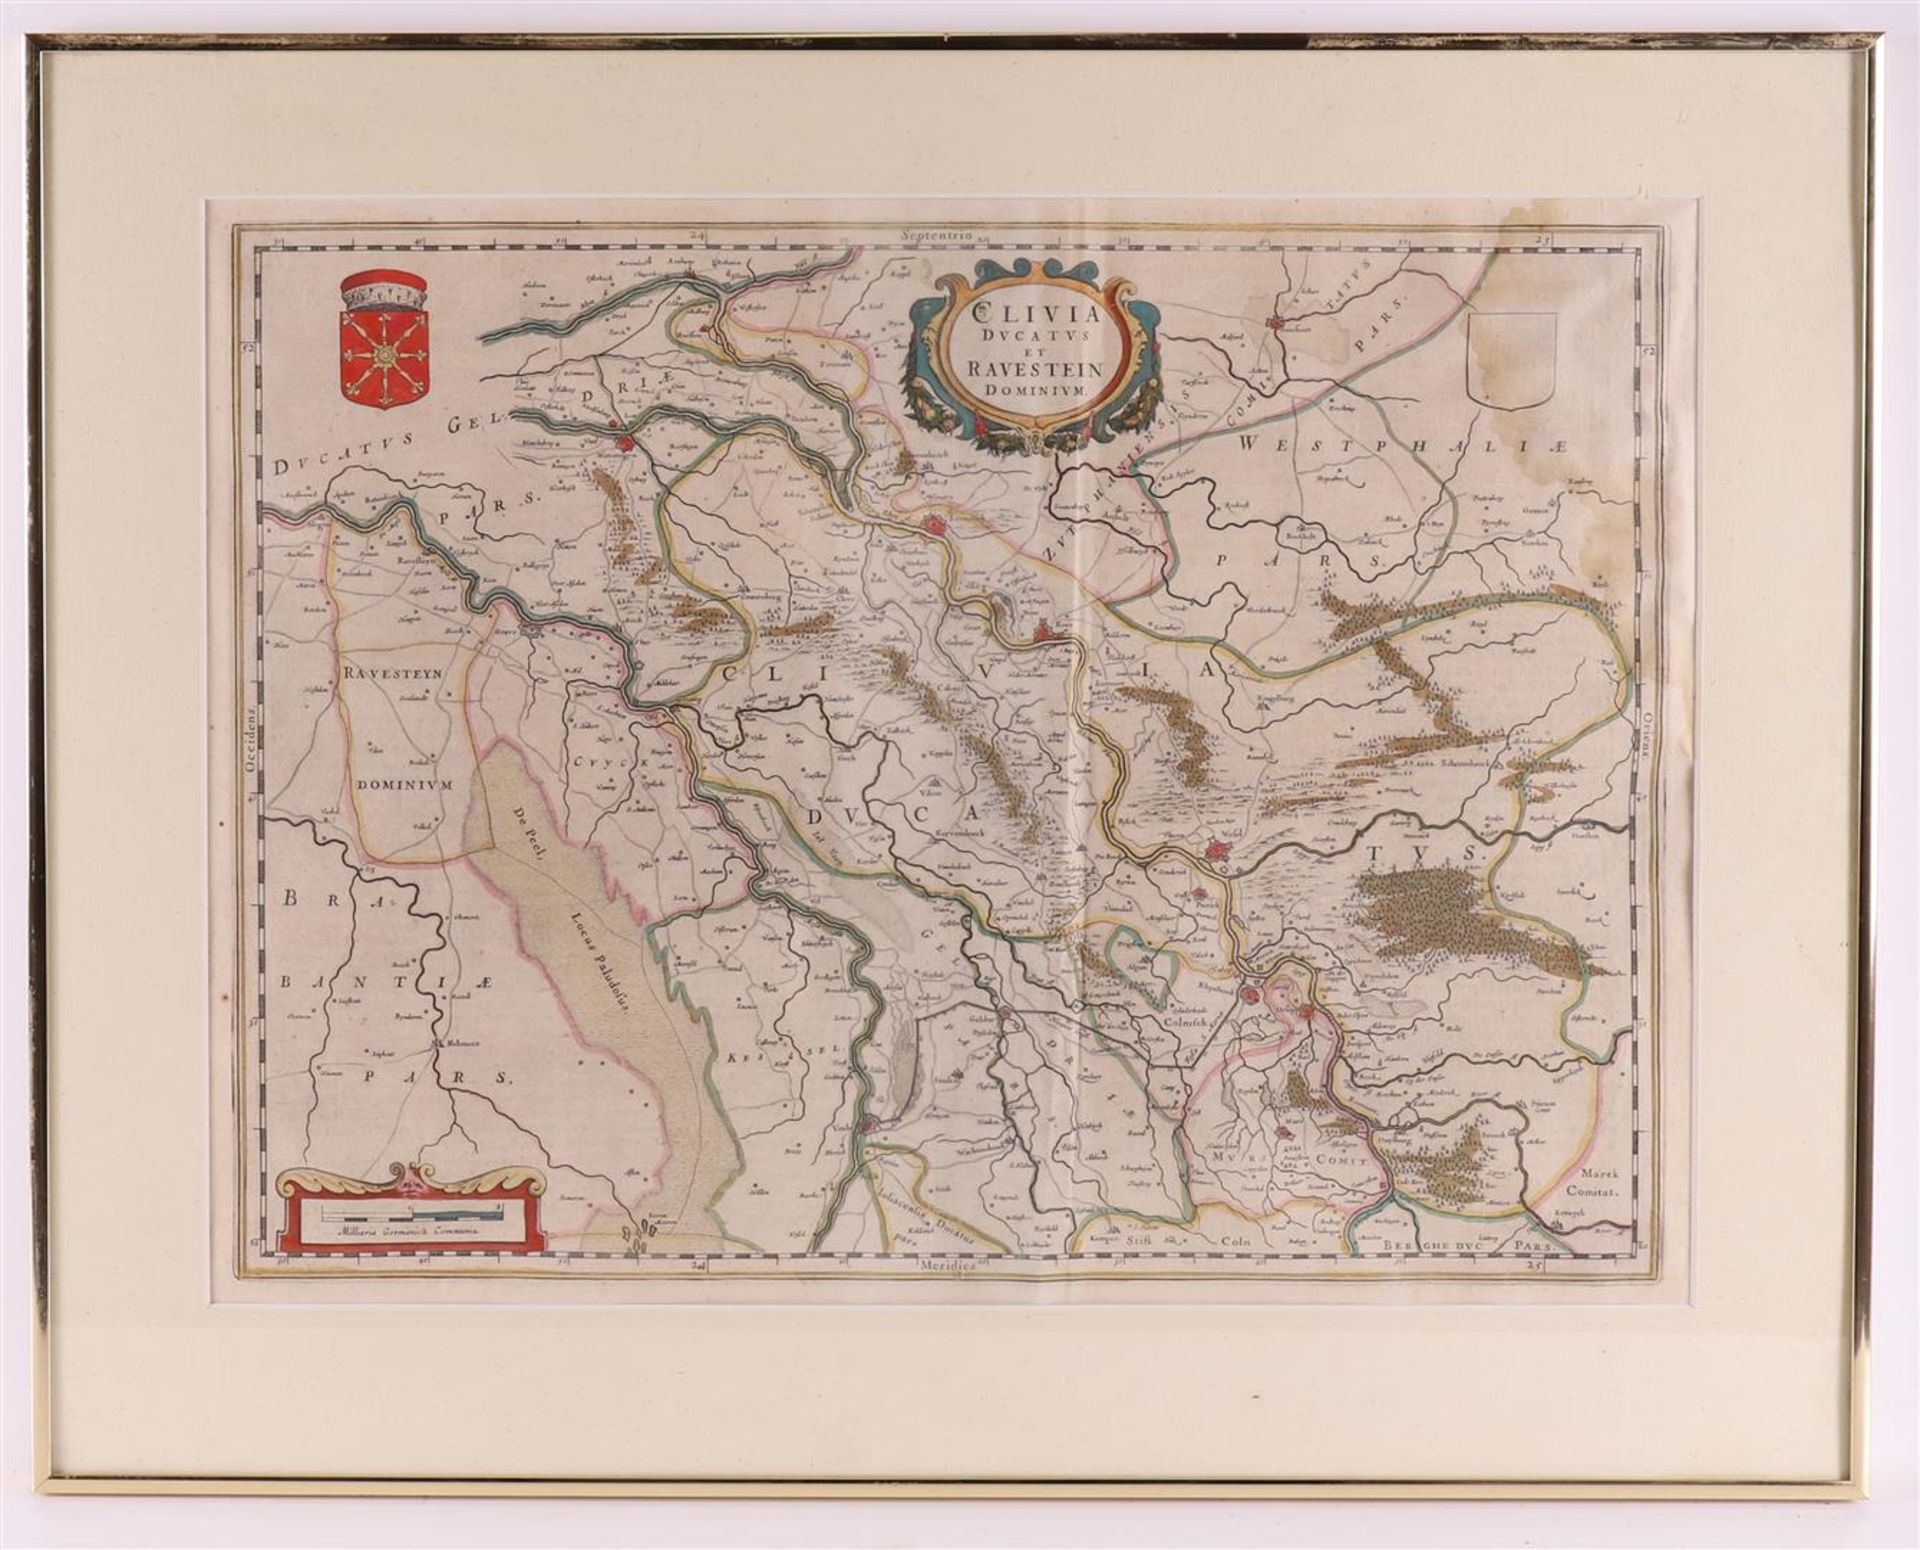 Topography 'Clivia Ducatvs Et Ravenstein Dominum", Atlas Maior, Joan Blaeu, 1667, hand-coloured